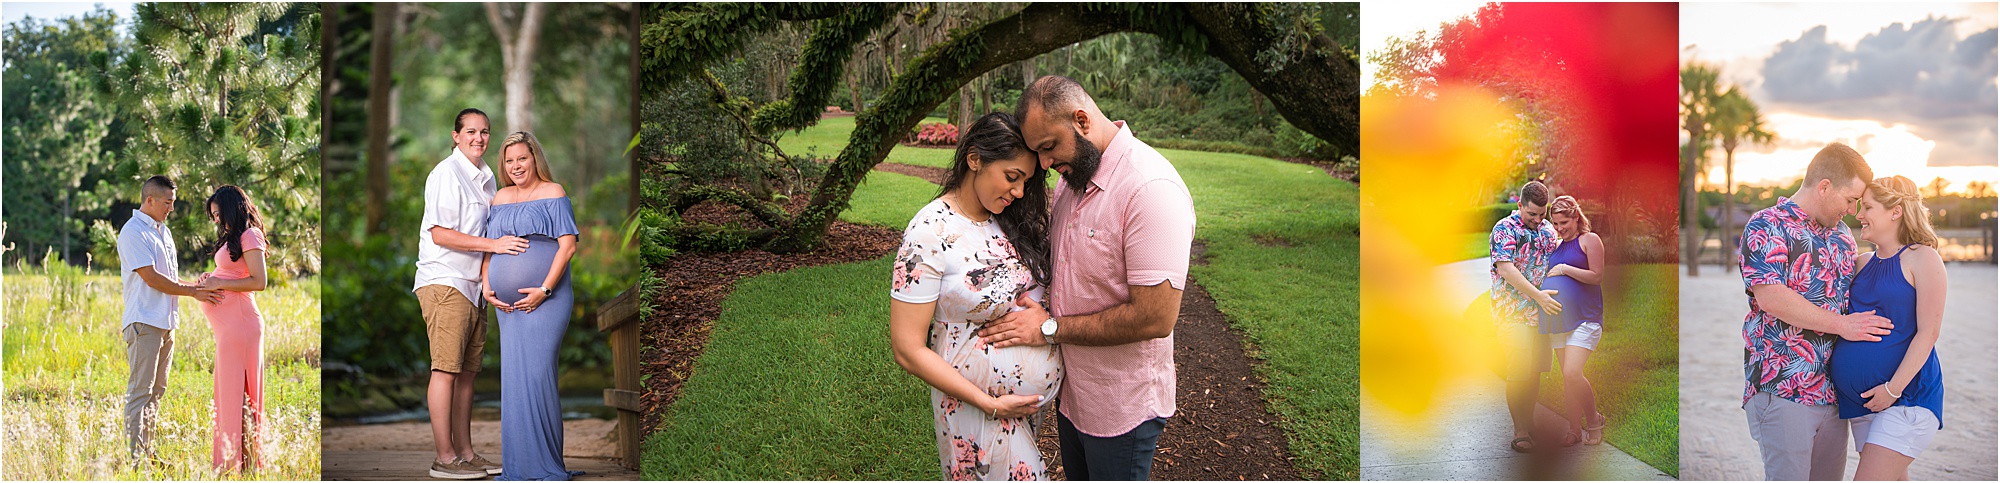 Orlando-Maternity-poses-locations-